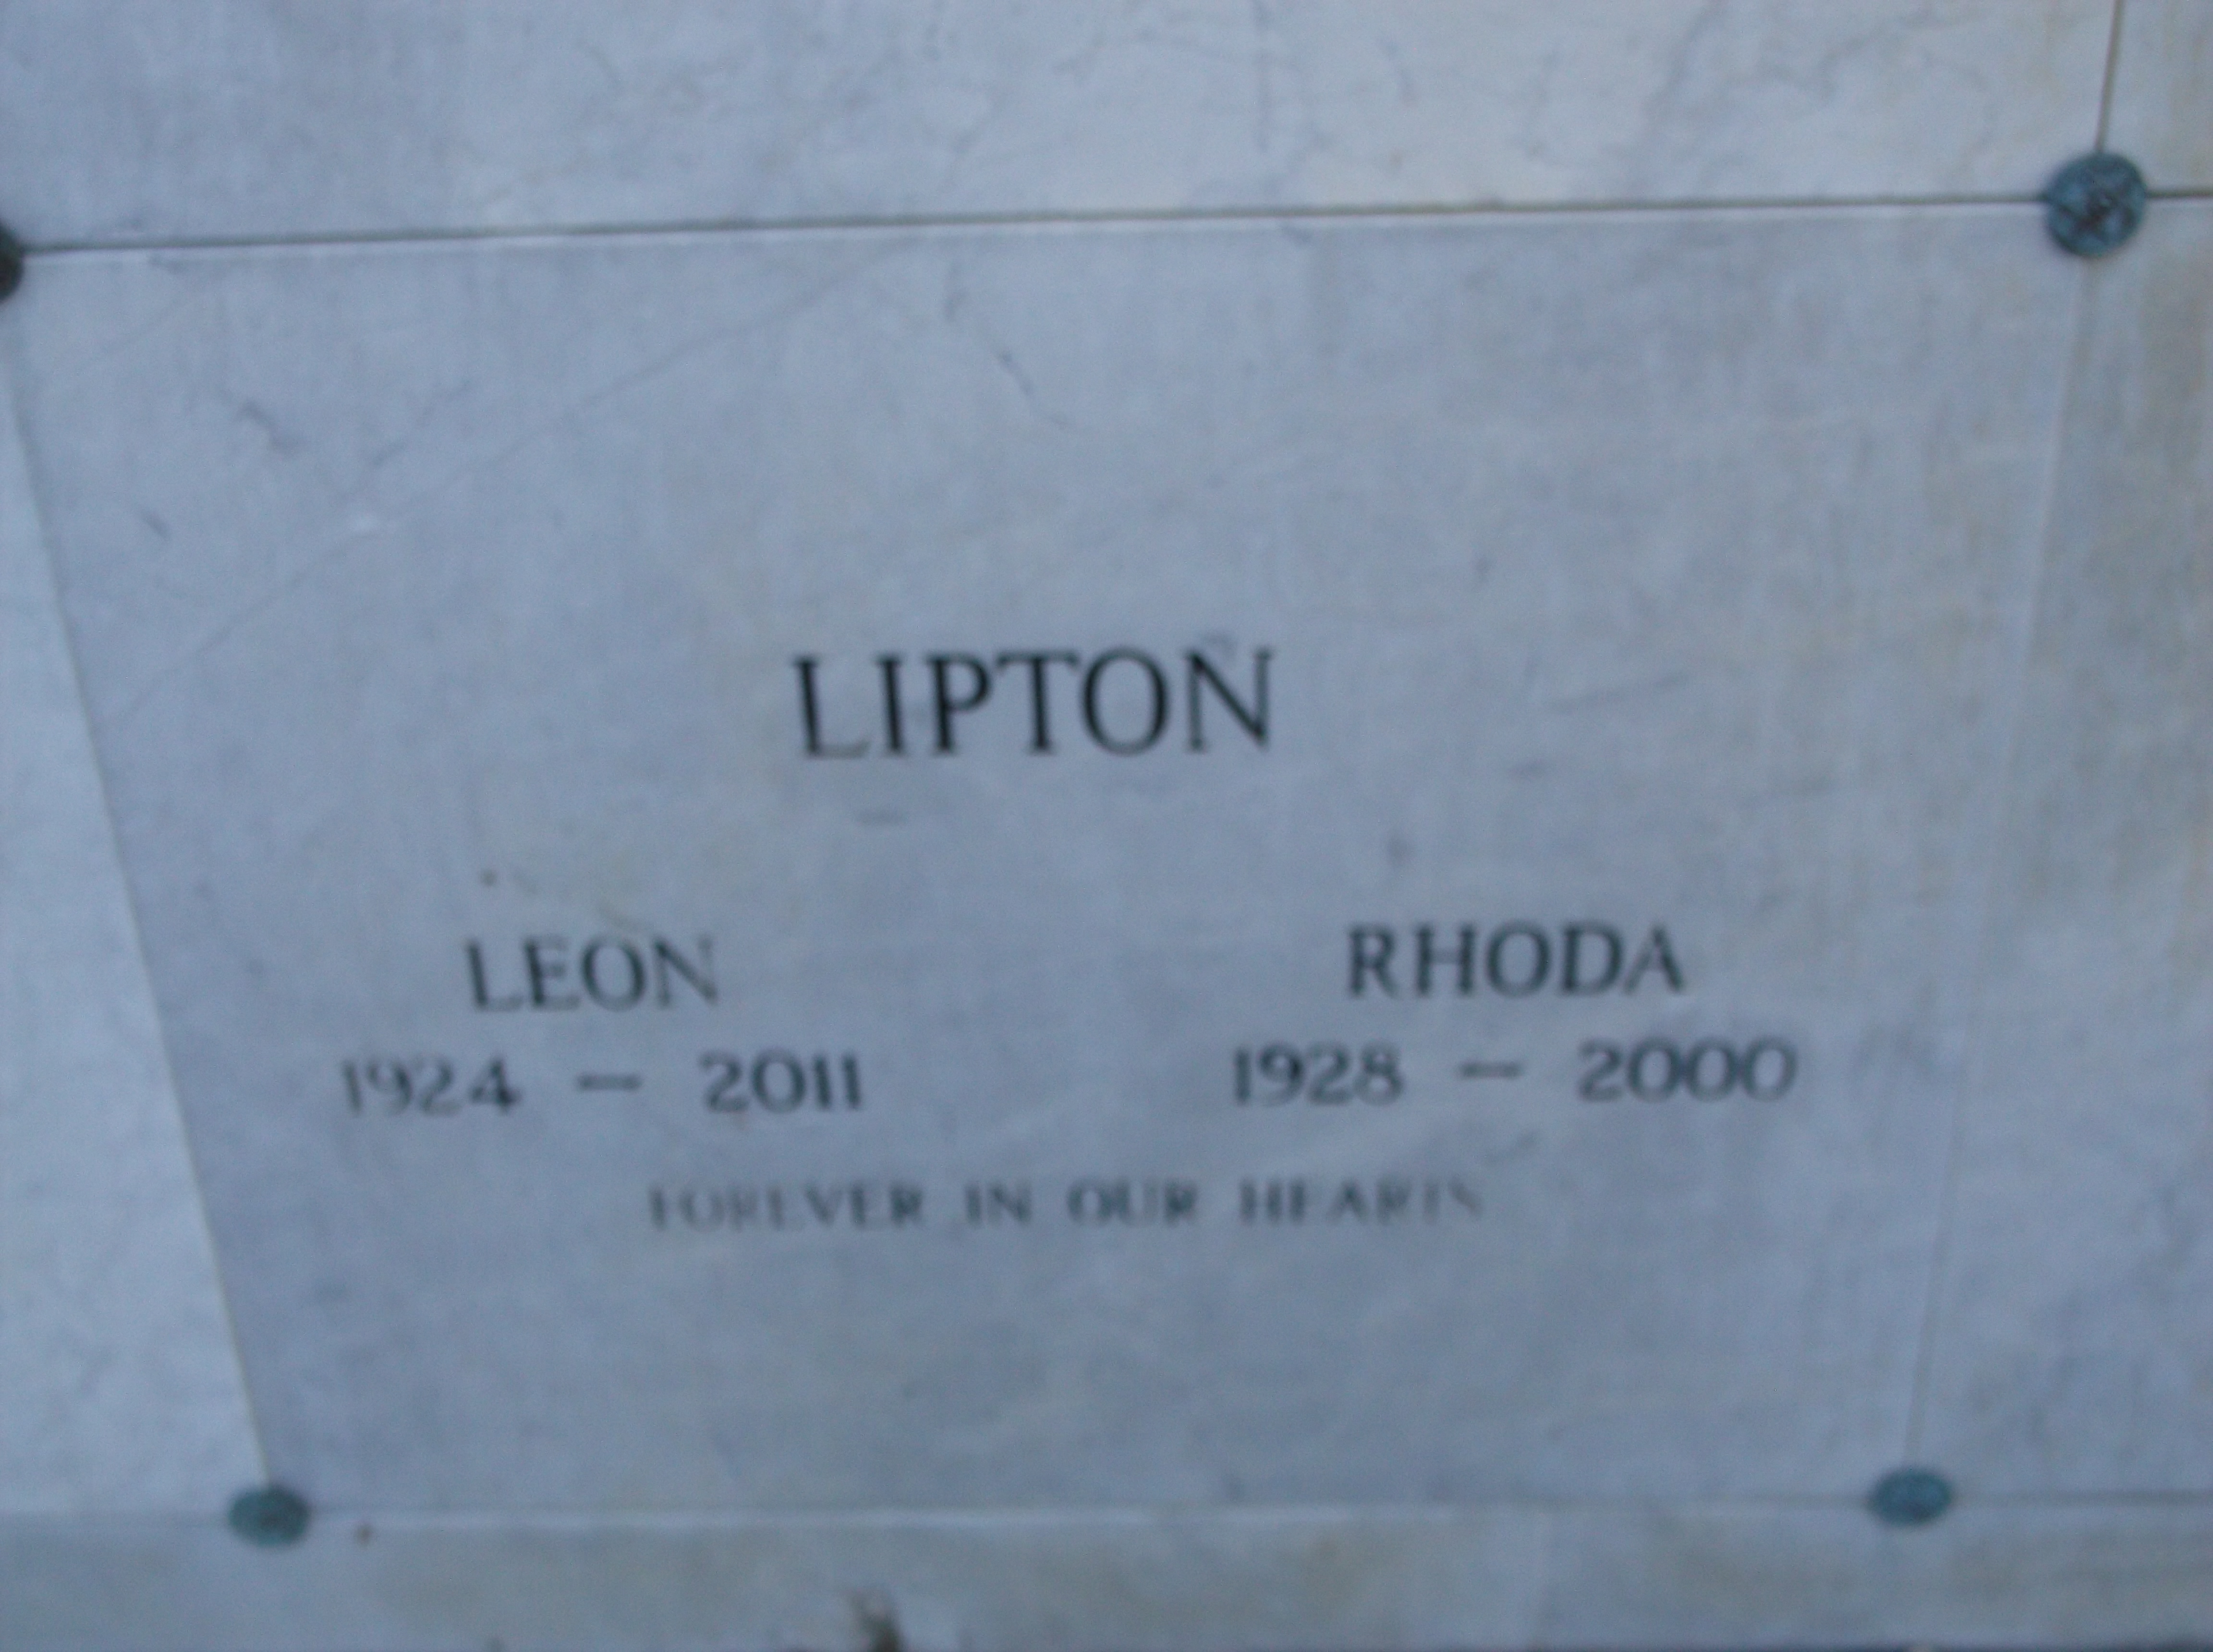 Leon Lipton